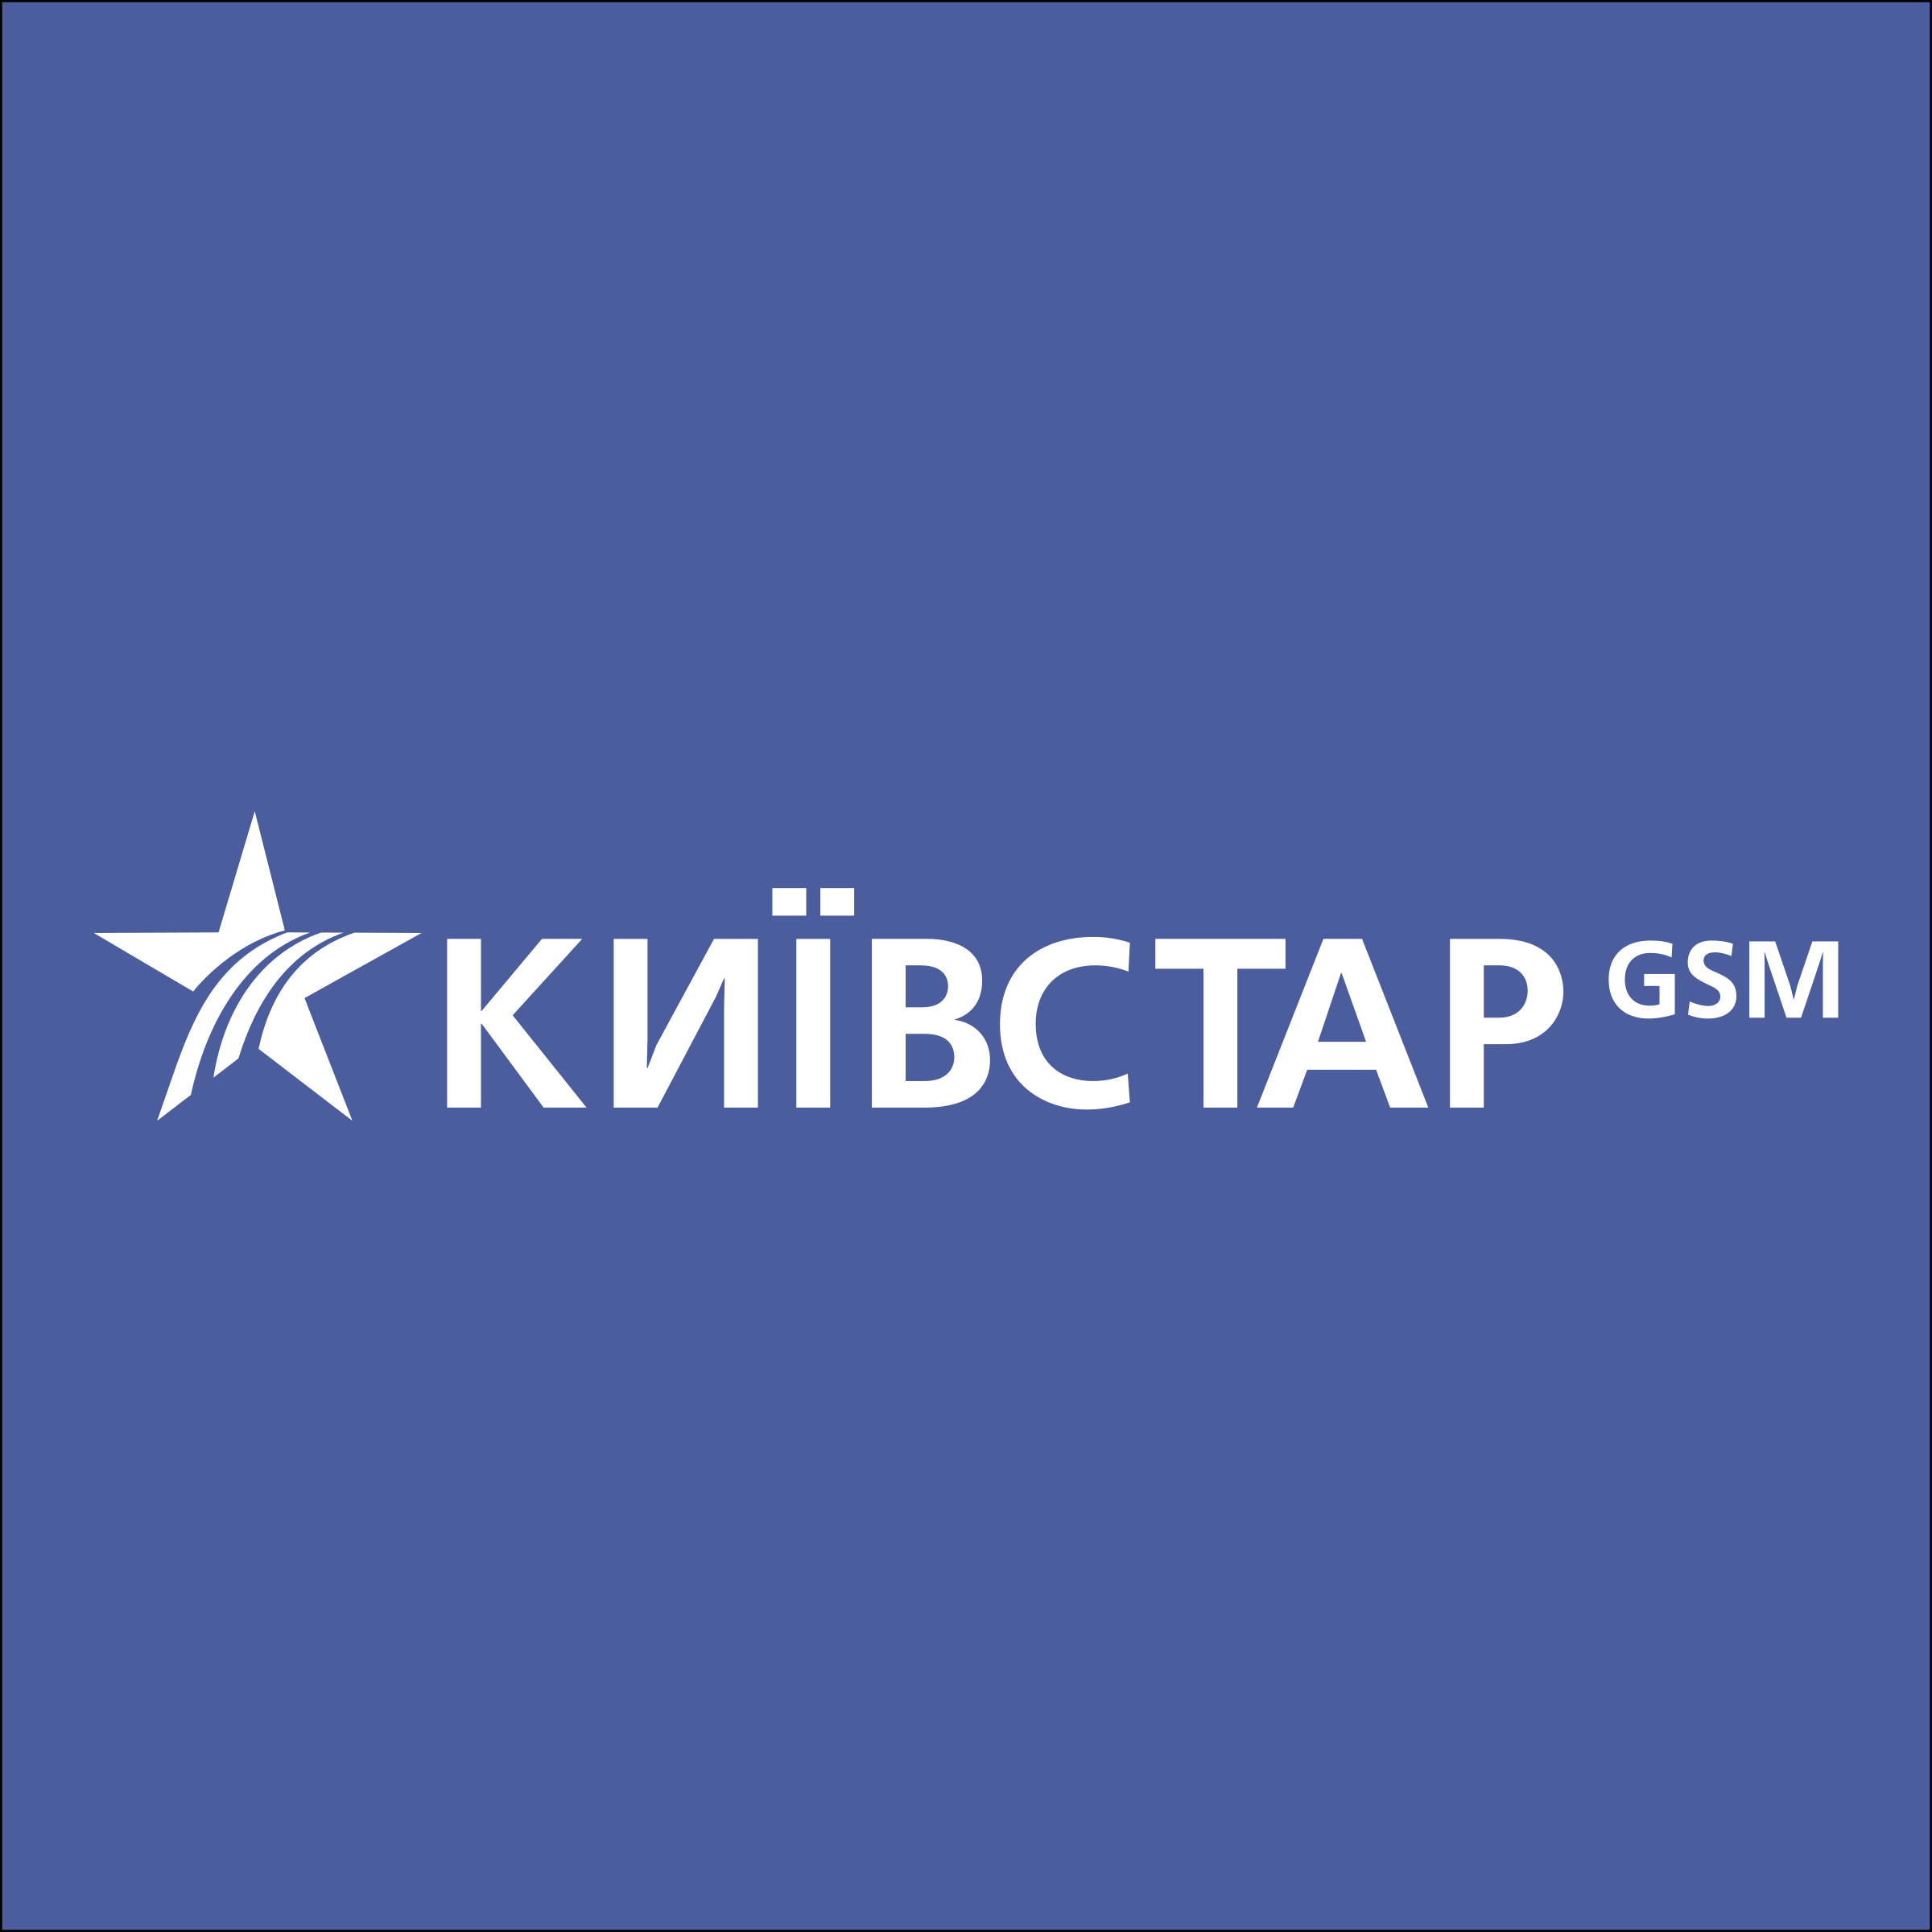 Velveeta Logo - Kyivstar GSM Logo PNG Transparent & SVG Vector - Freebie Supply